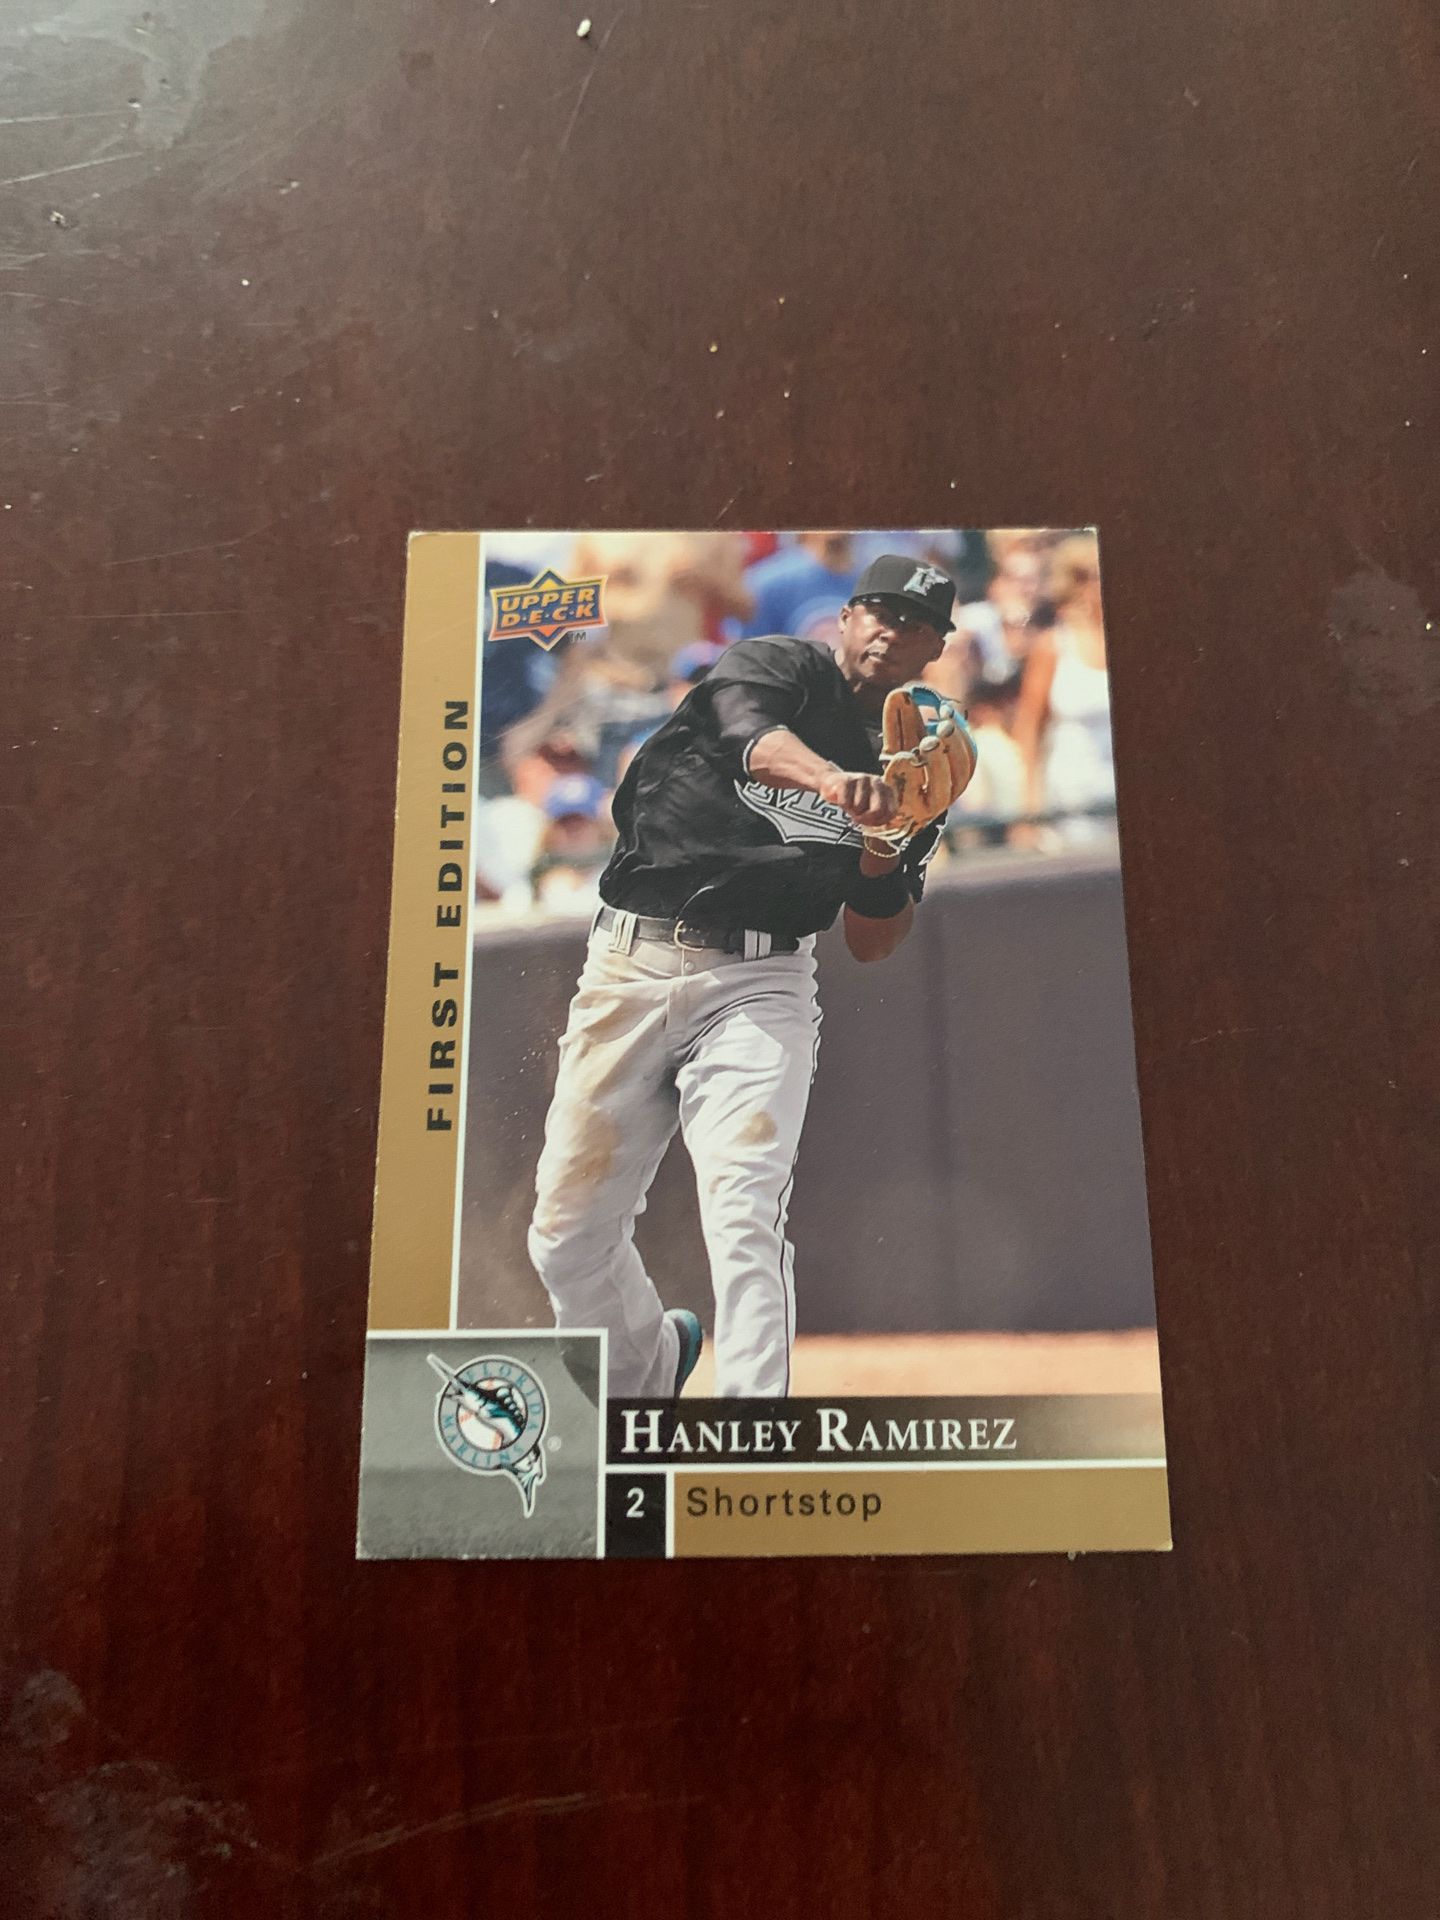 Hanley Ramirez first Edition baseball card